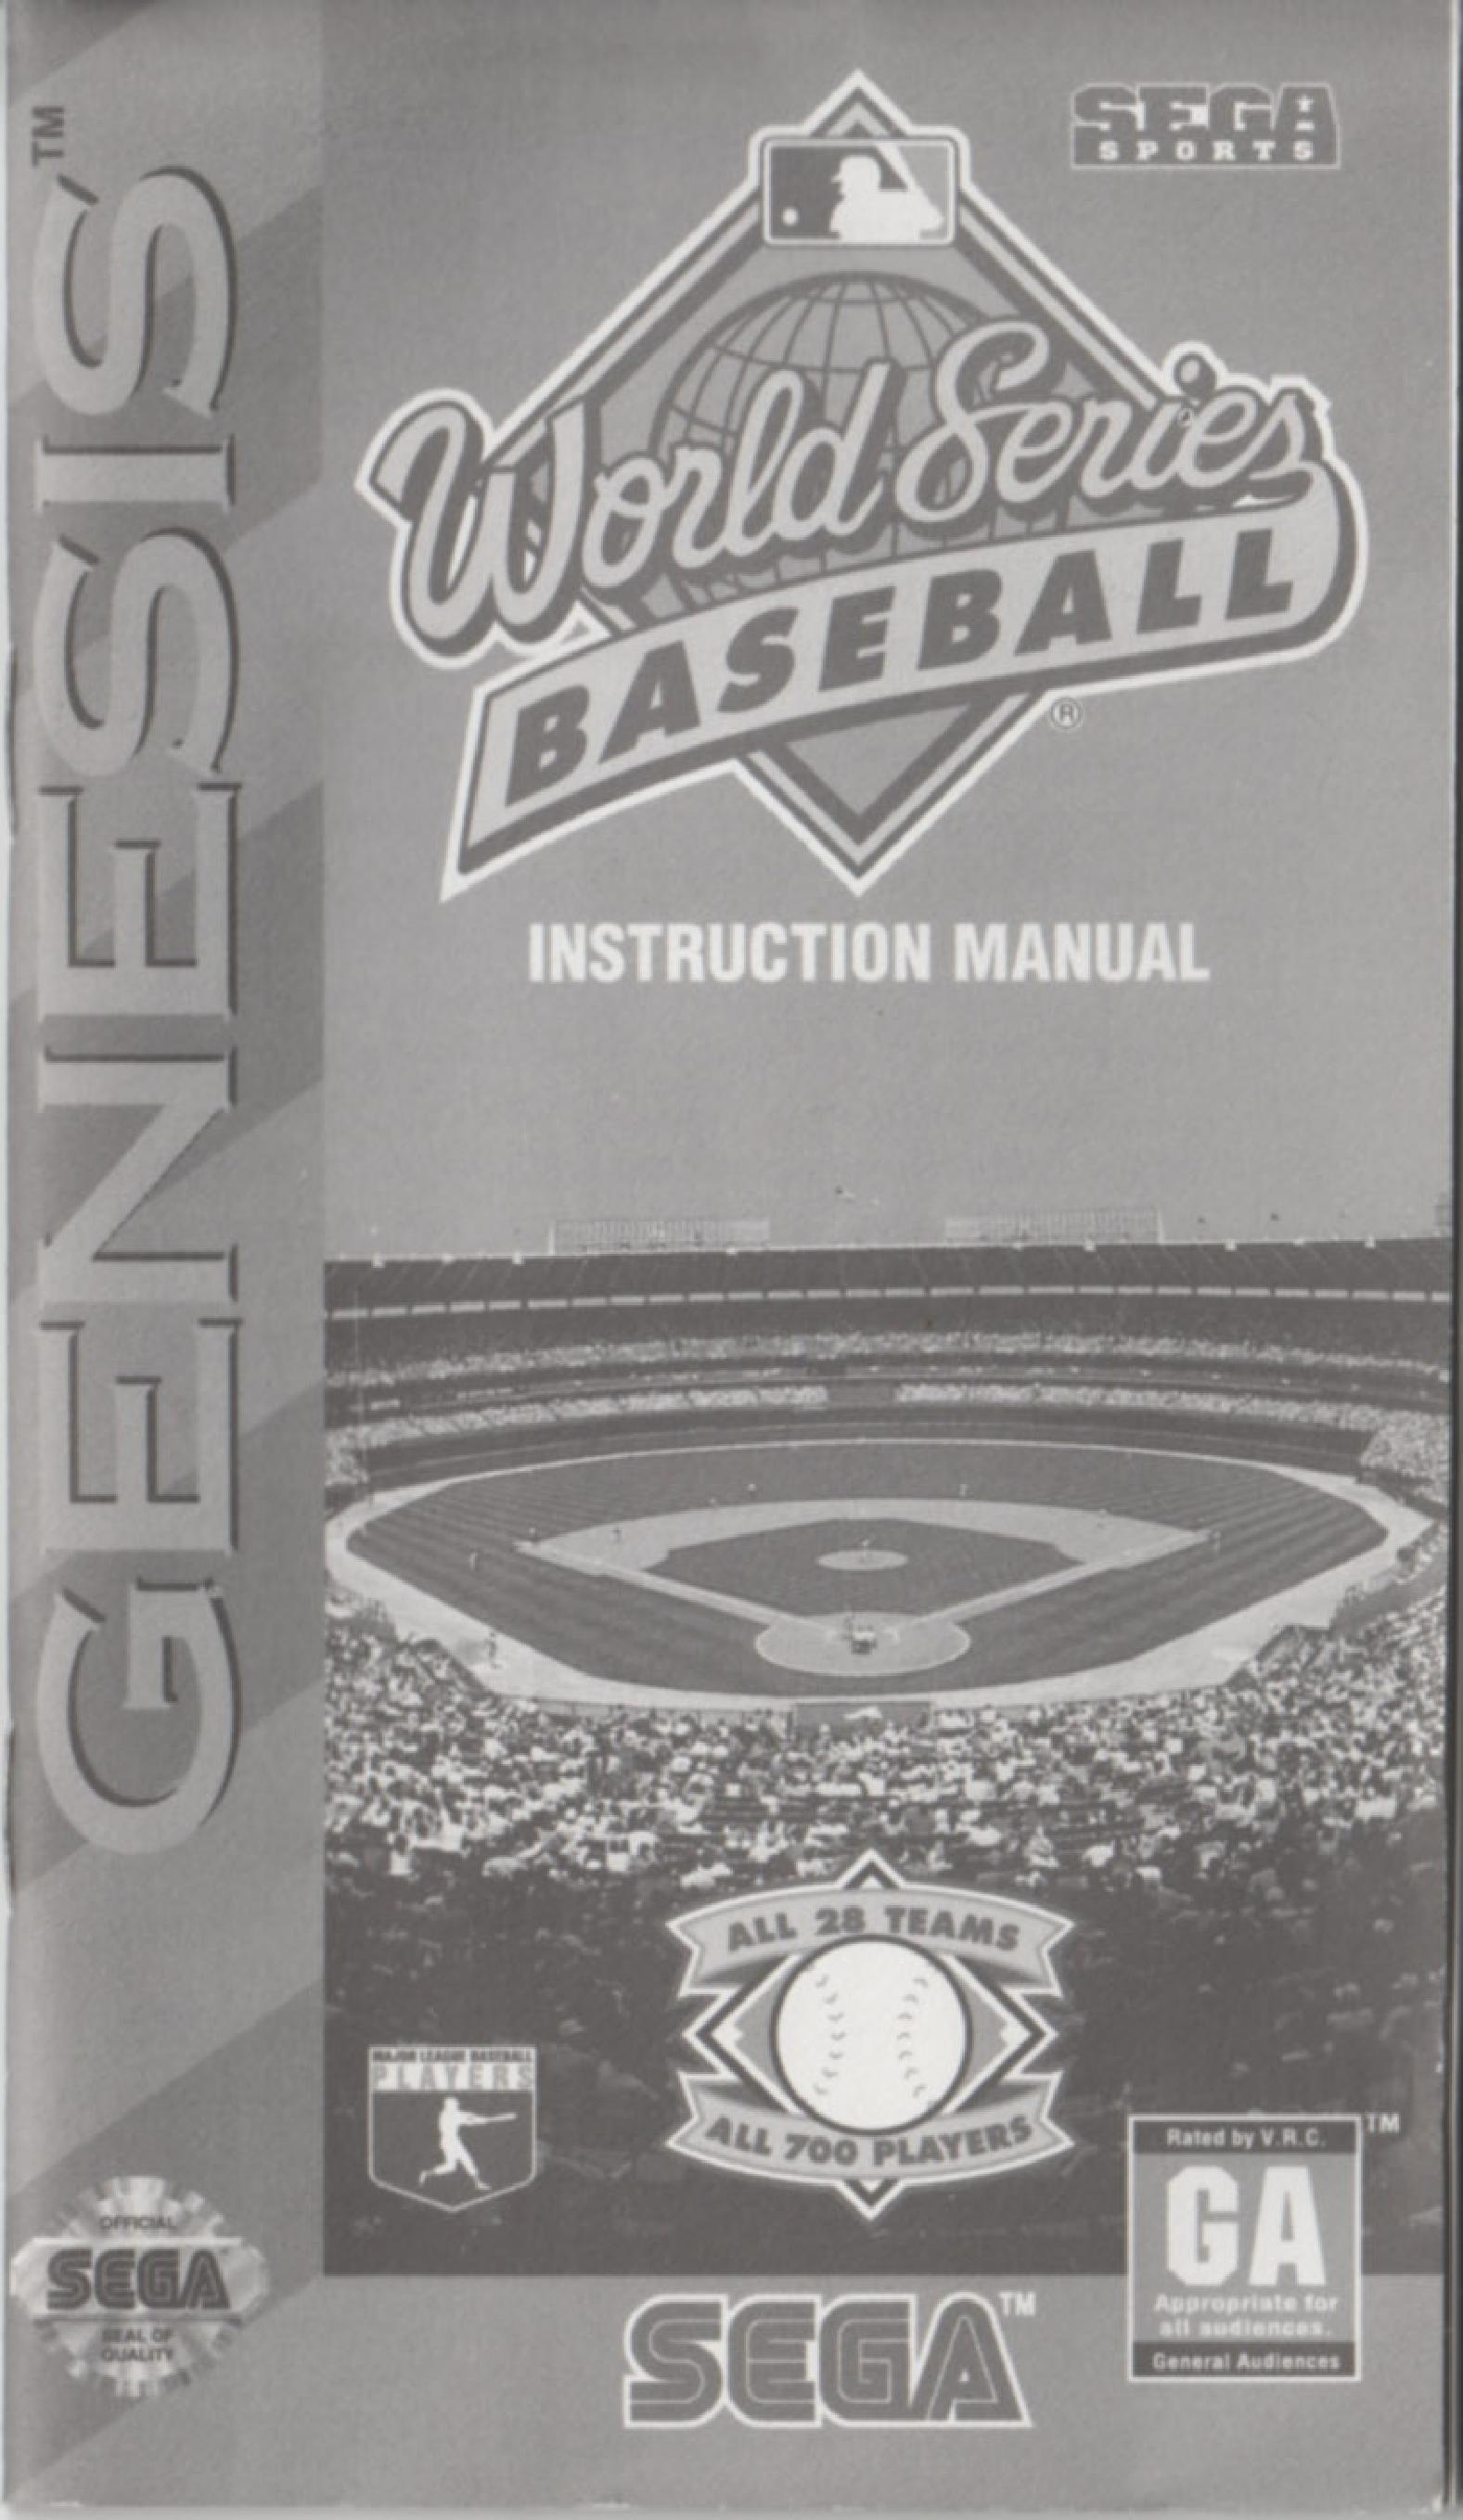 World Series Baseball MD US Manual.pdf